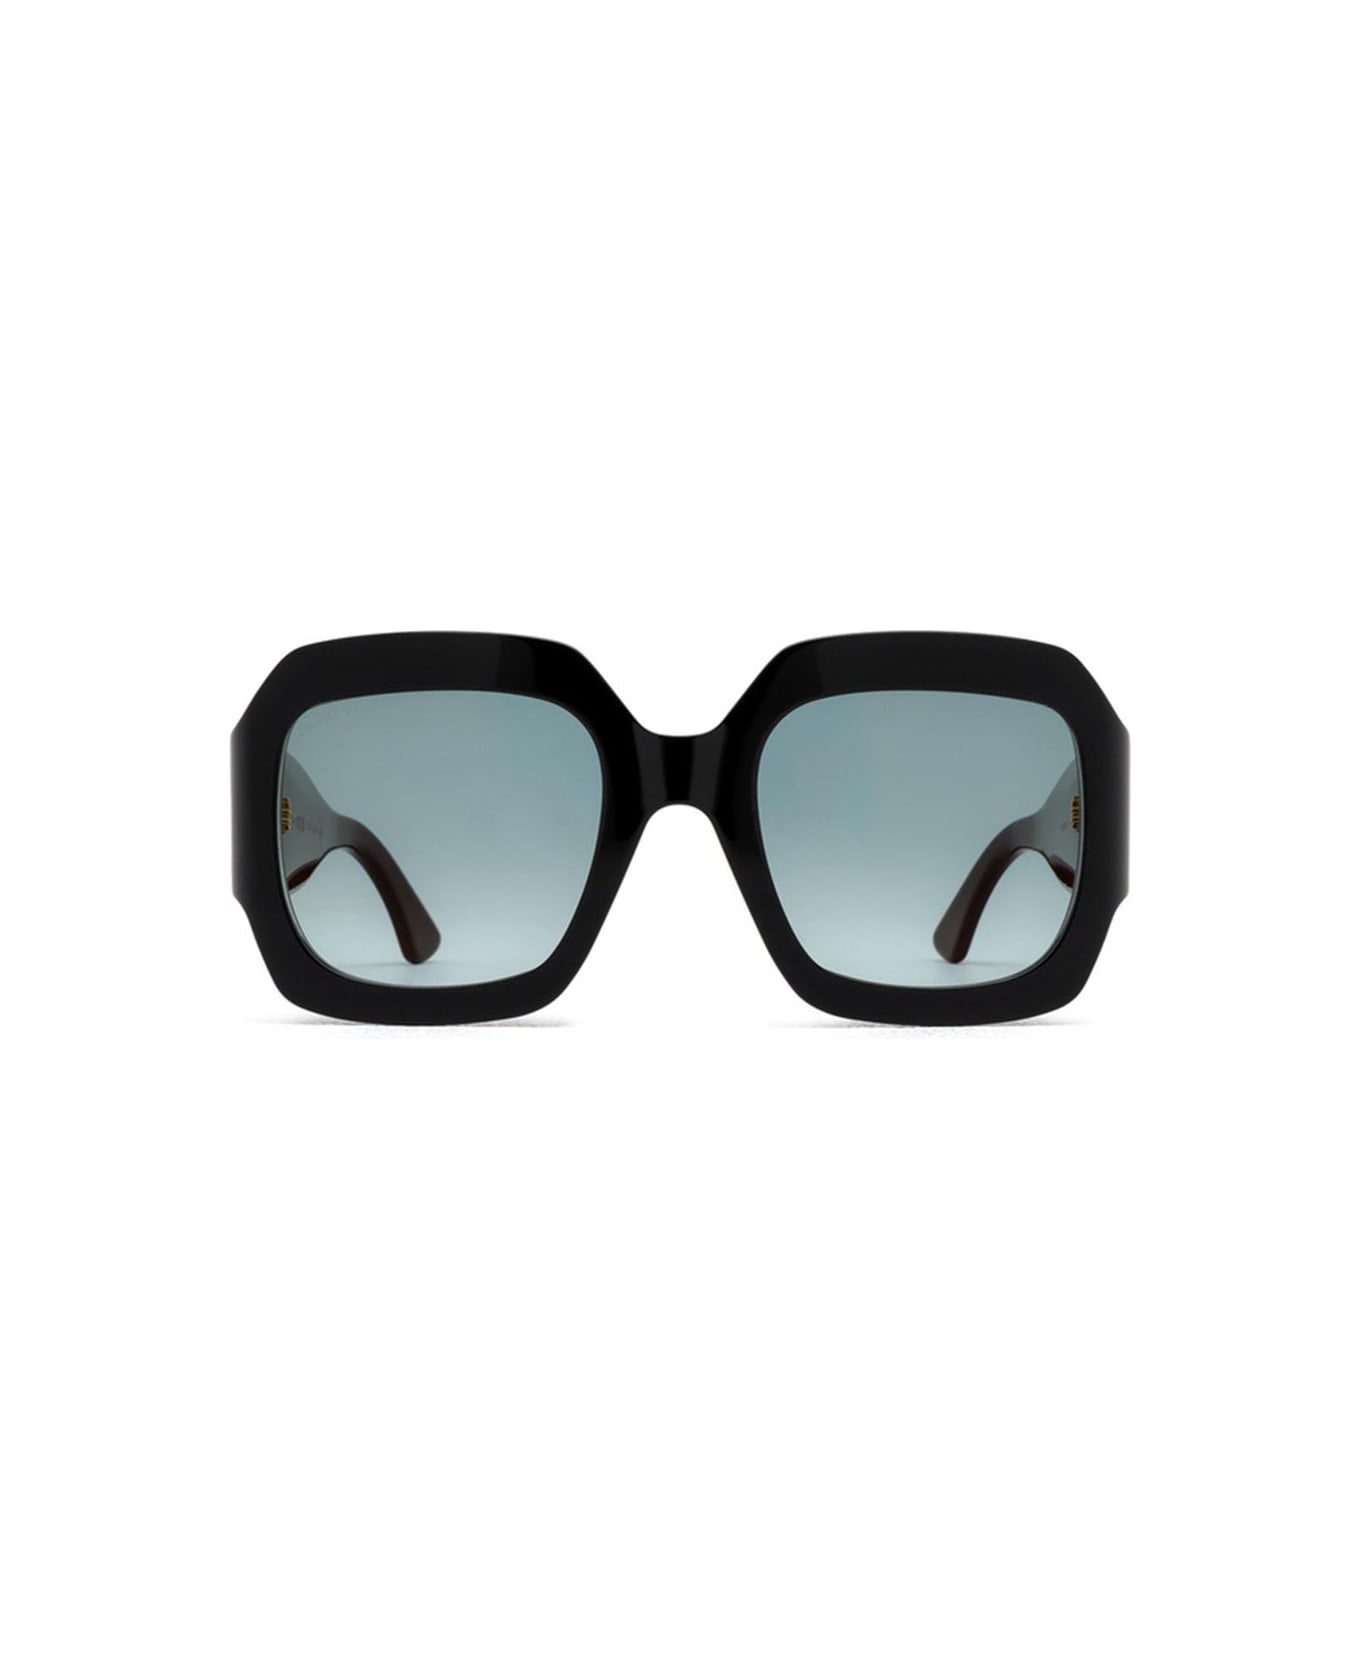 Cartier Eyewear Sunglasses - Nero/Verde